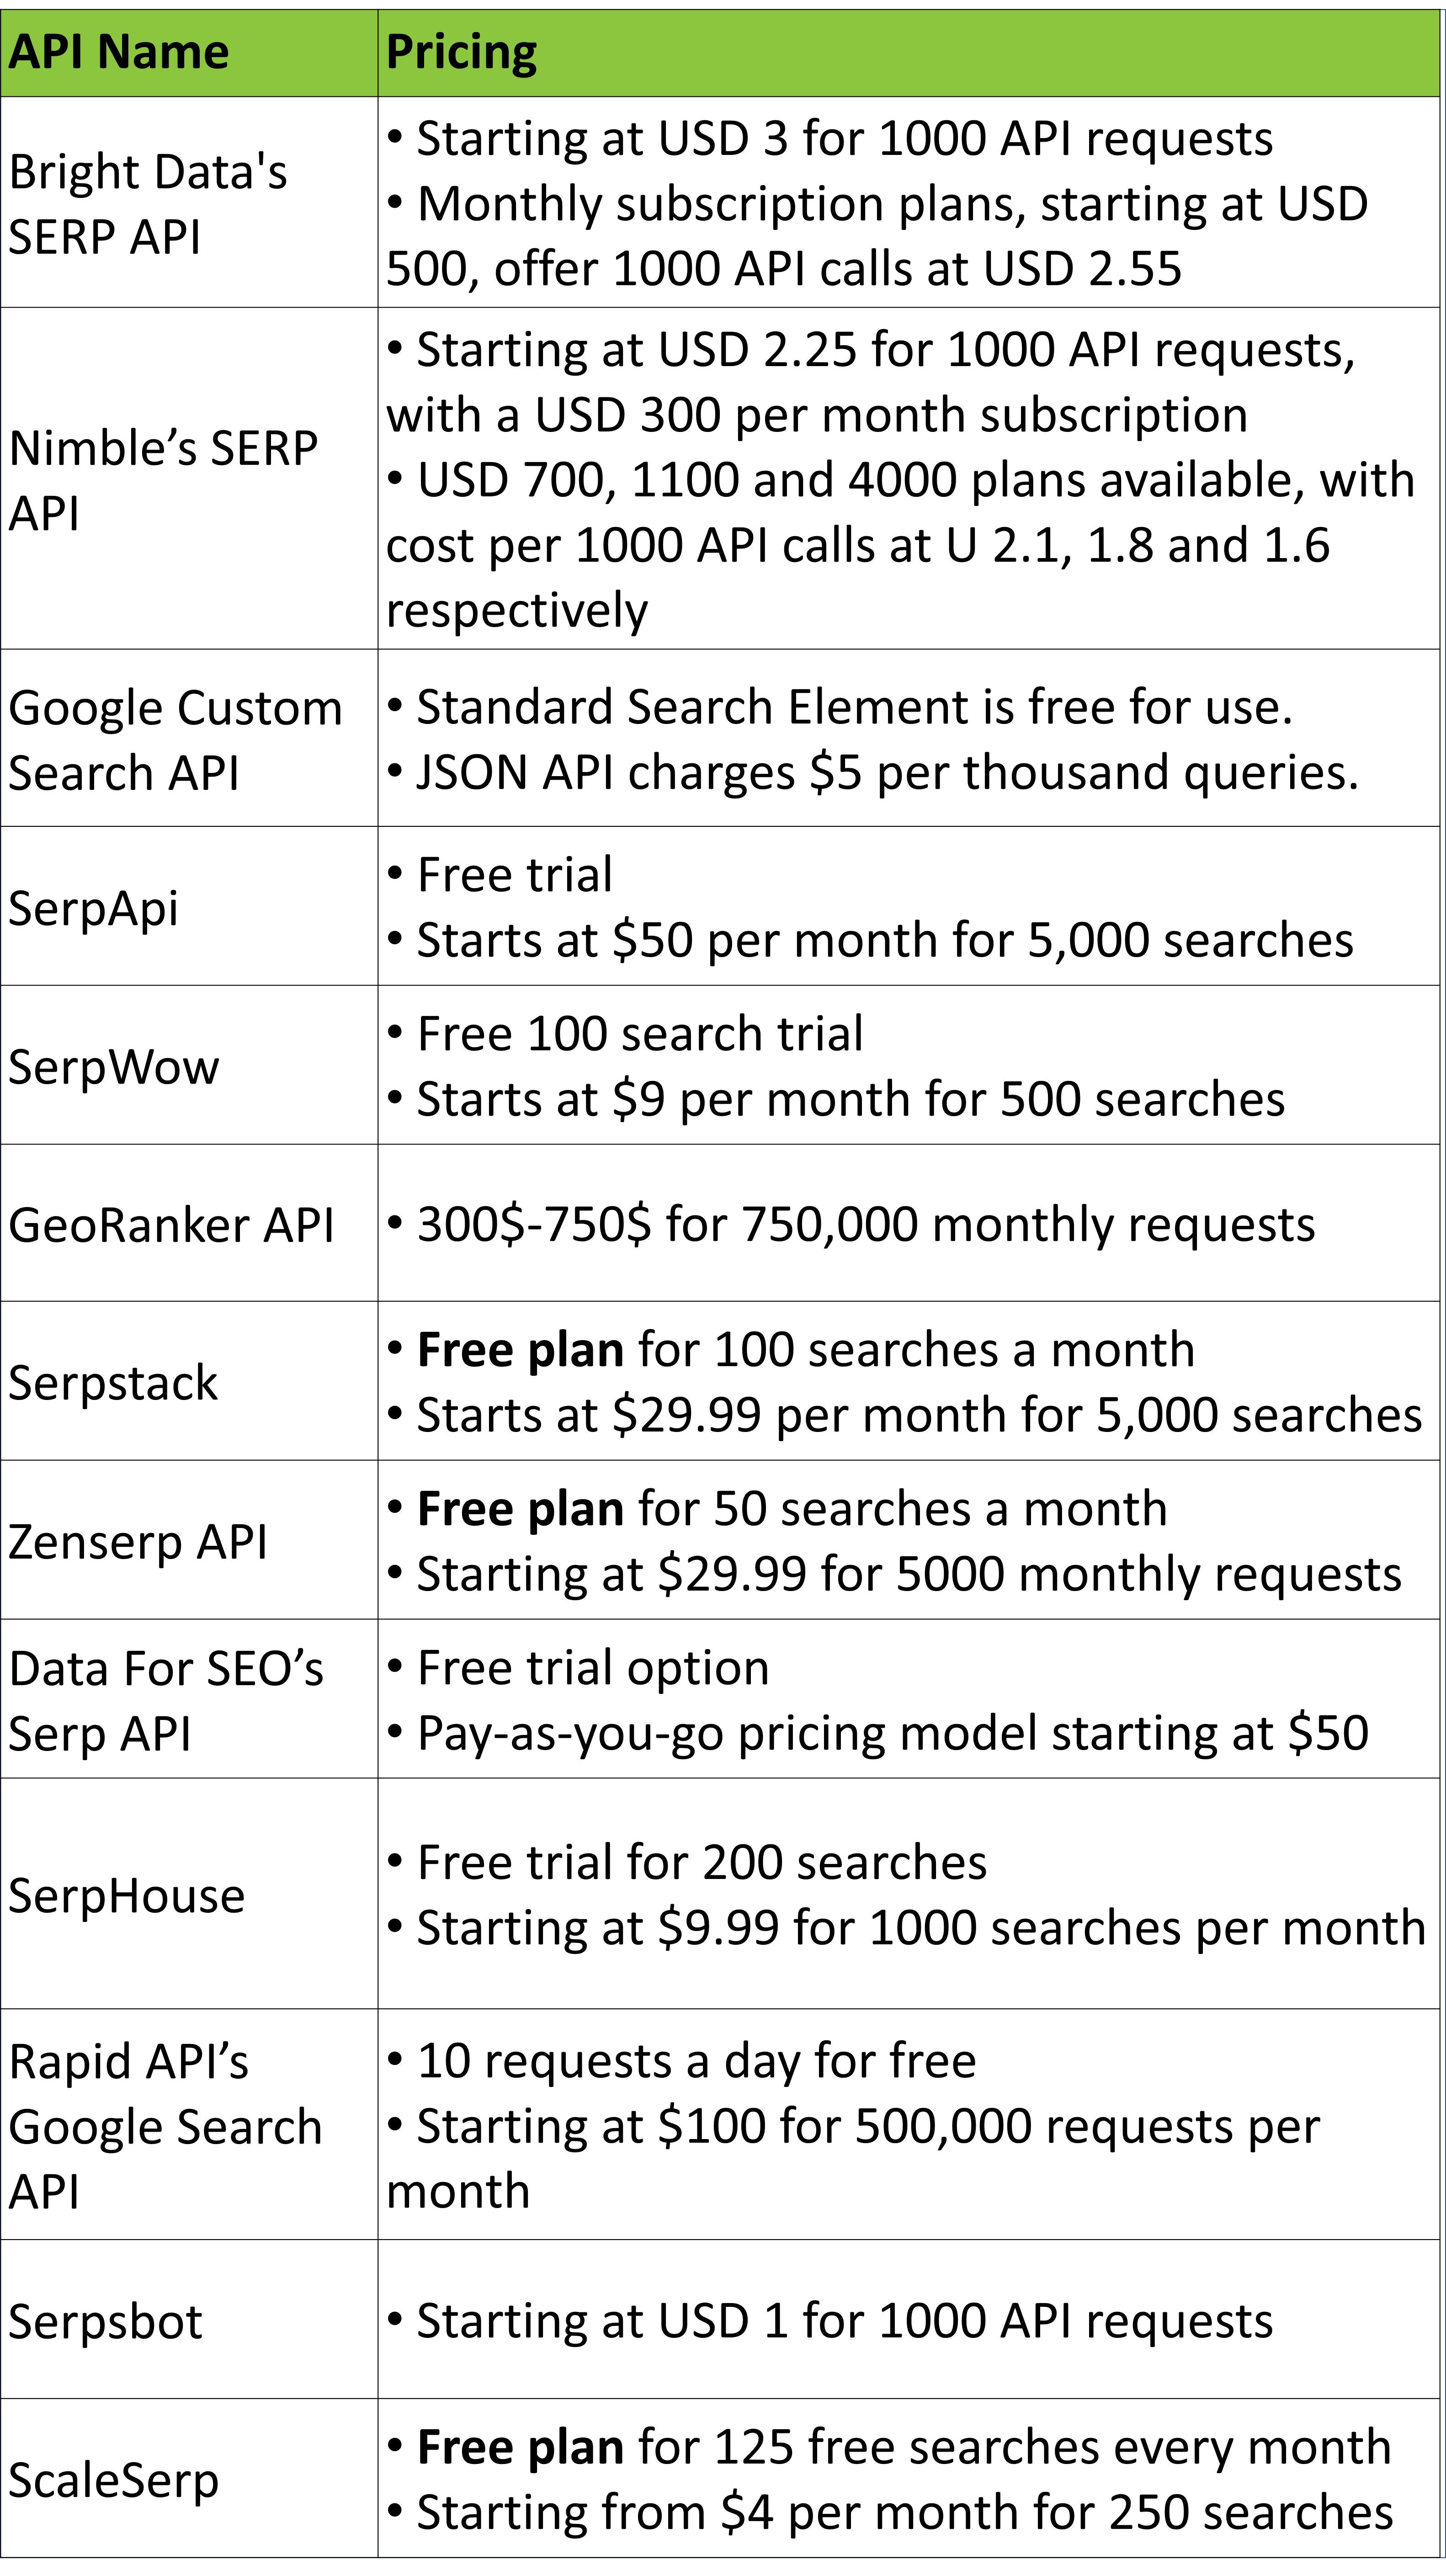 Best Google Search APIs - A Price Comparison